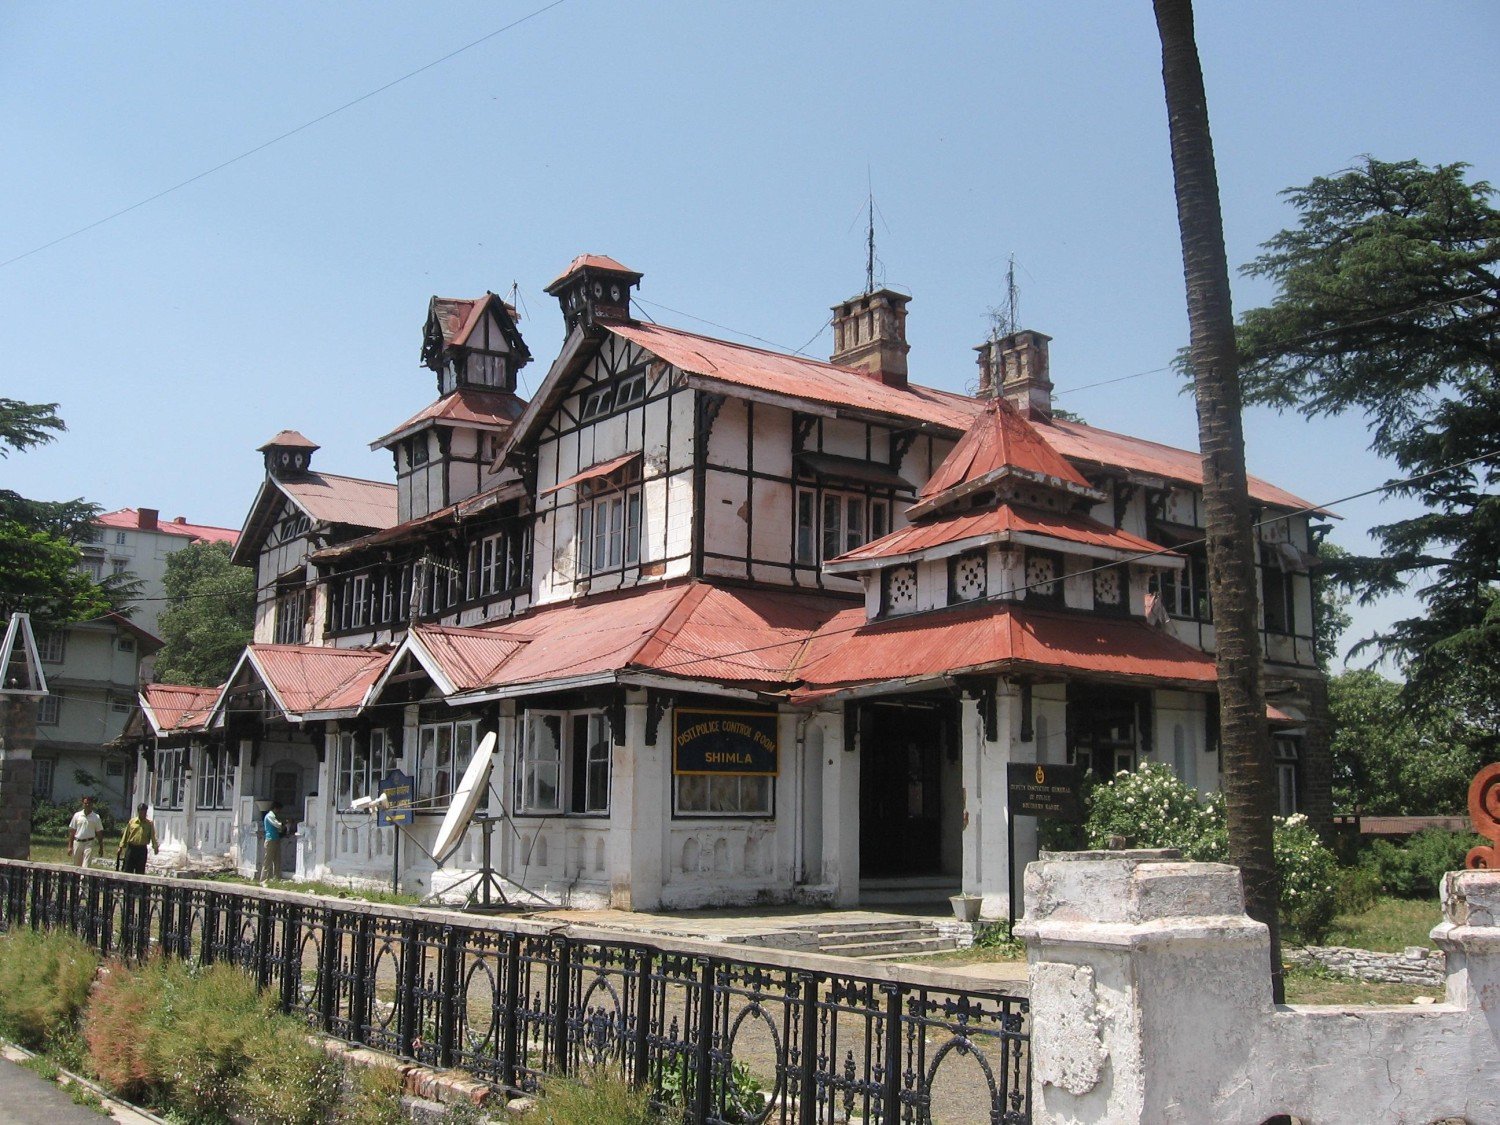 Bantony is an important building on the Heritage Walk of Shimla